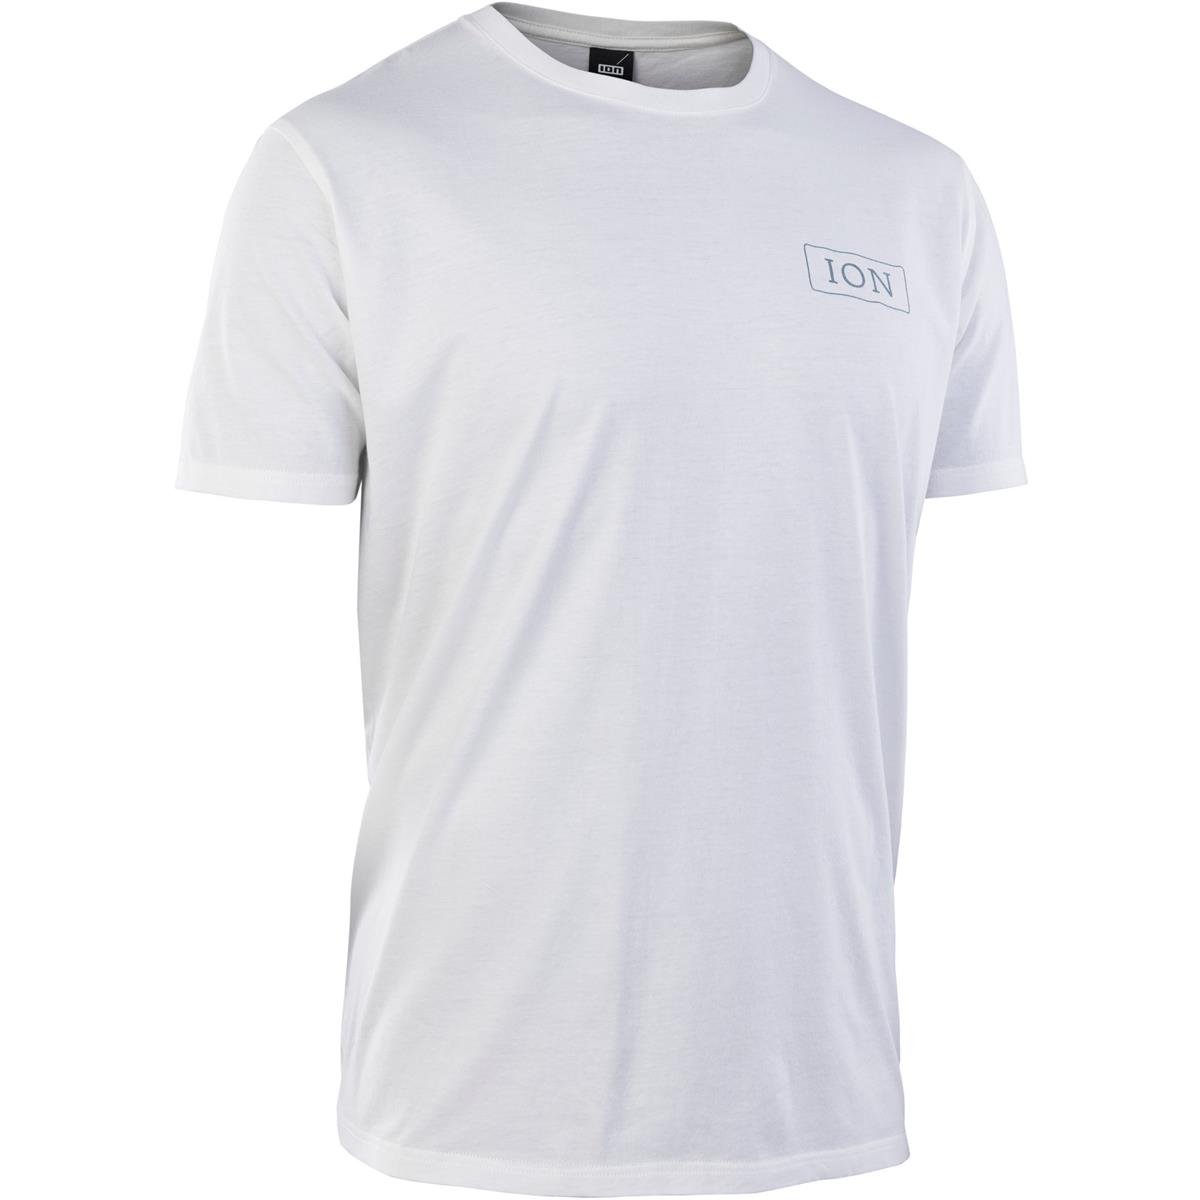 ION T-Shirt Addicted Peak Bianco